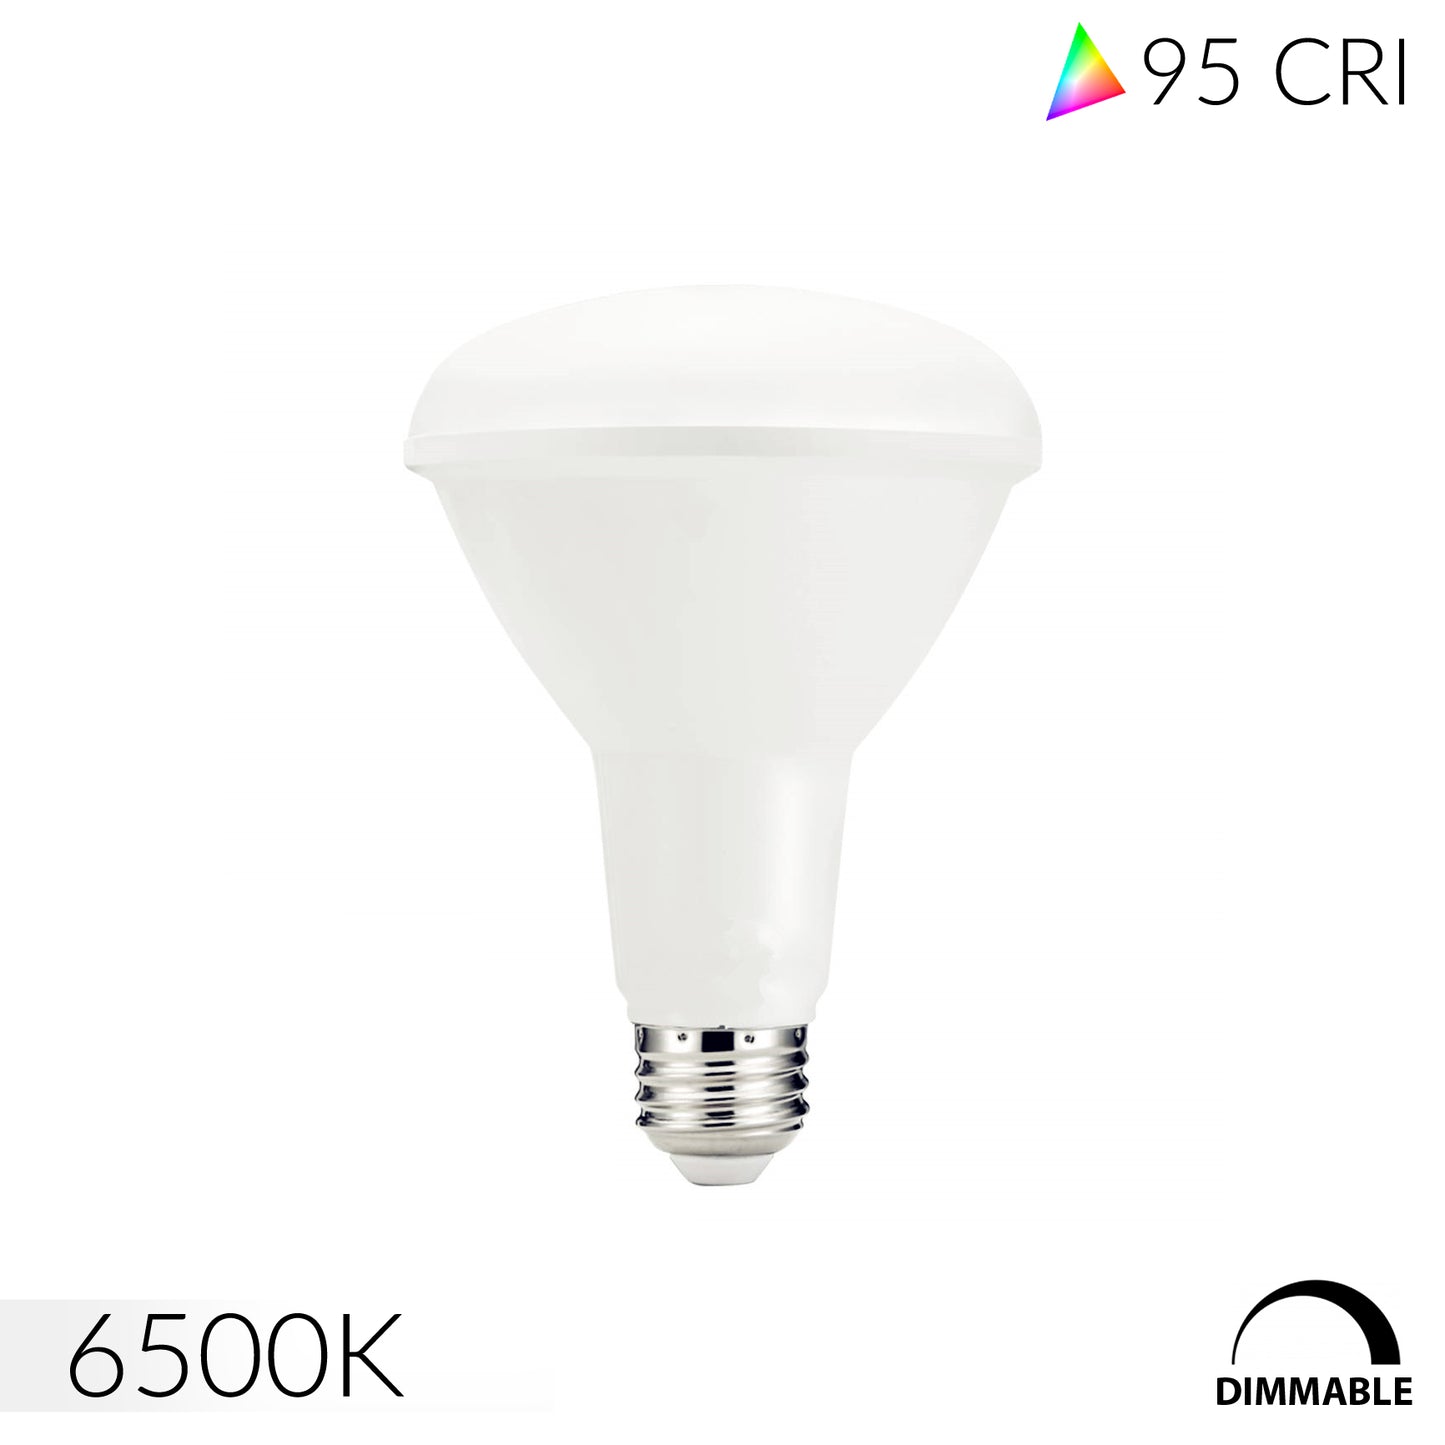 Ultra High 95 CRI 6500K E26 BR30 LED Bulb for Jewelry & Display